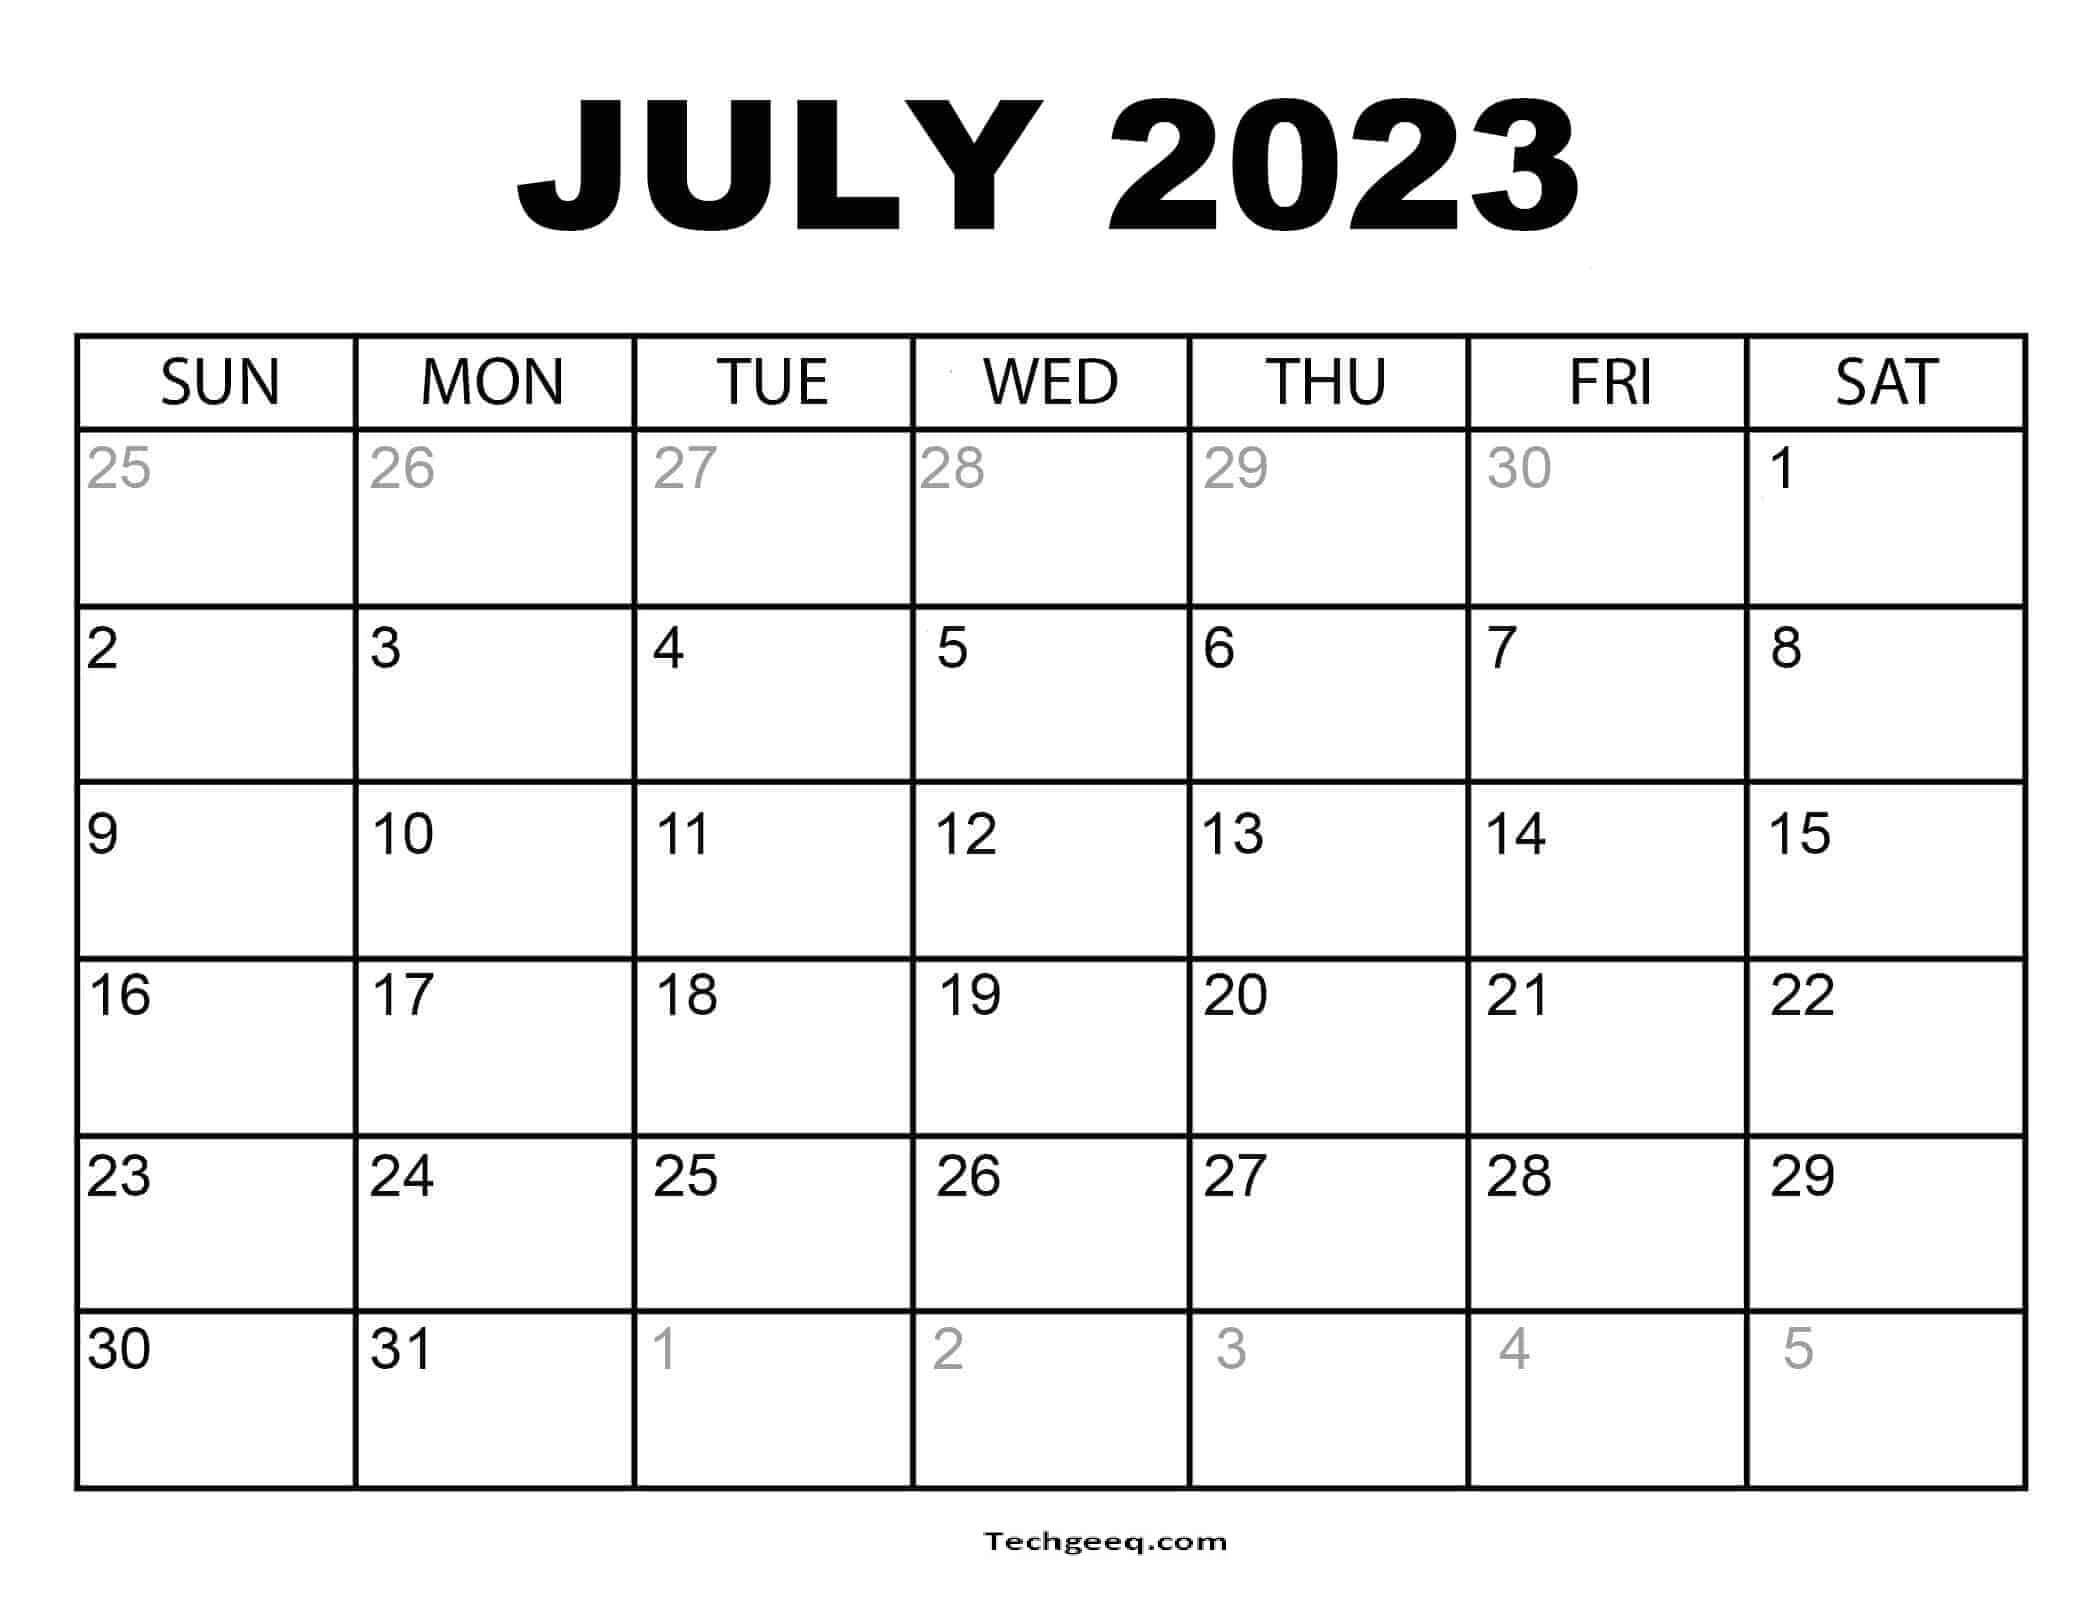 Download July 2023 Calendar